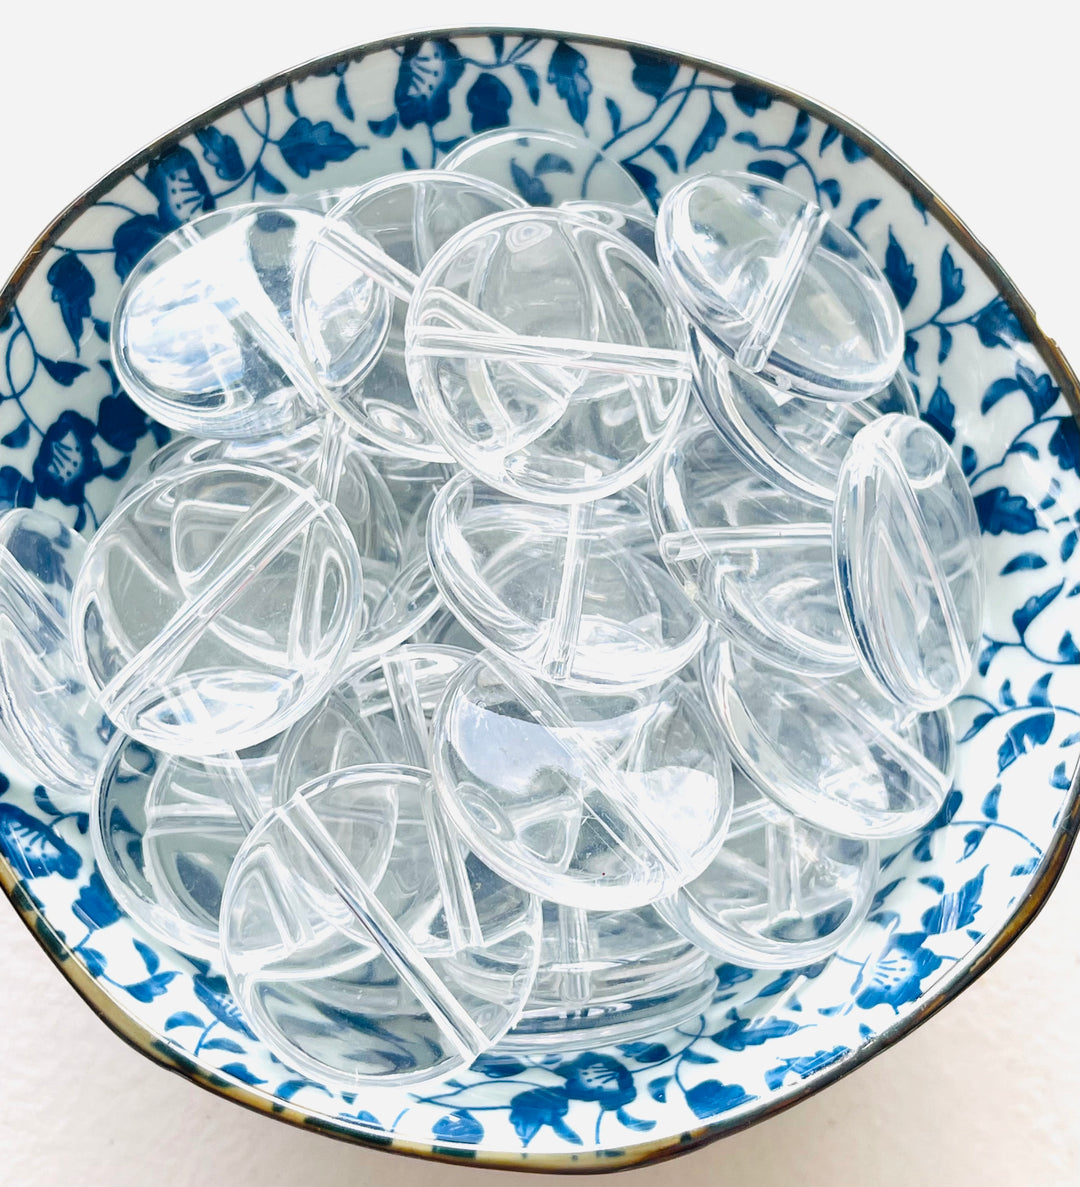 Grosses perles plates transparentes 32 mm